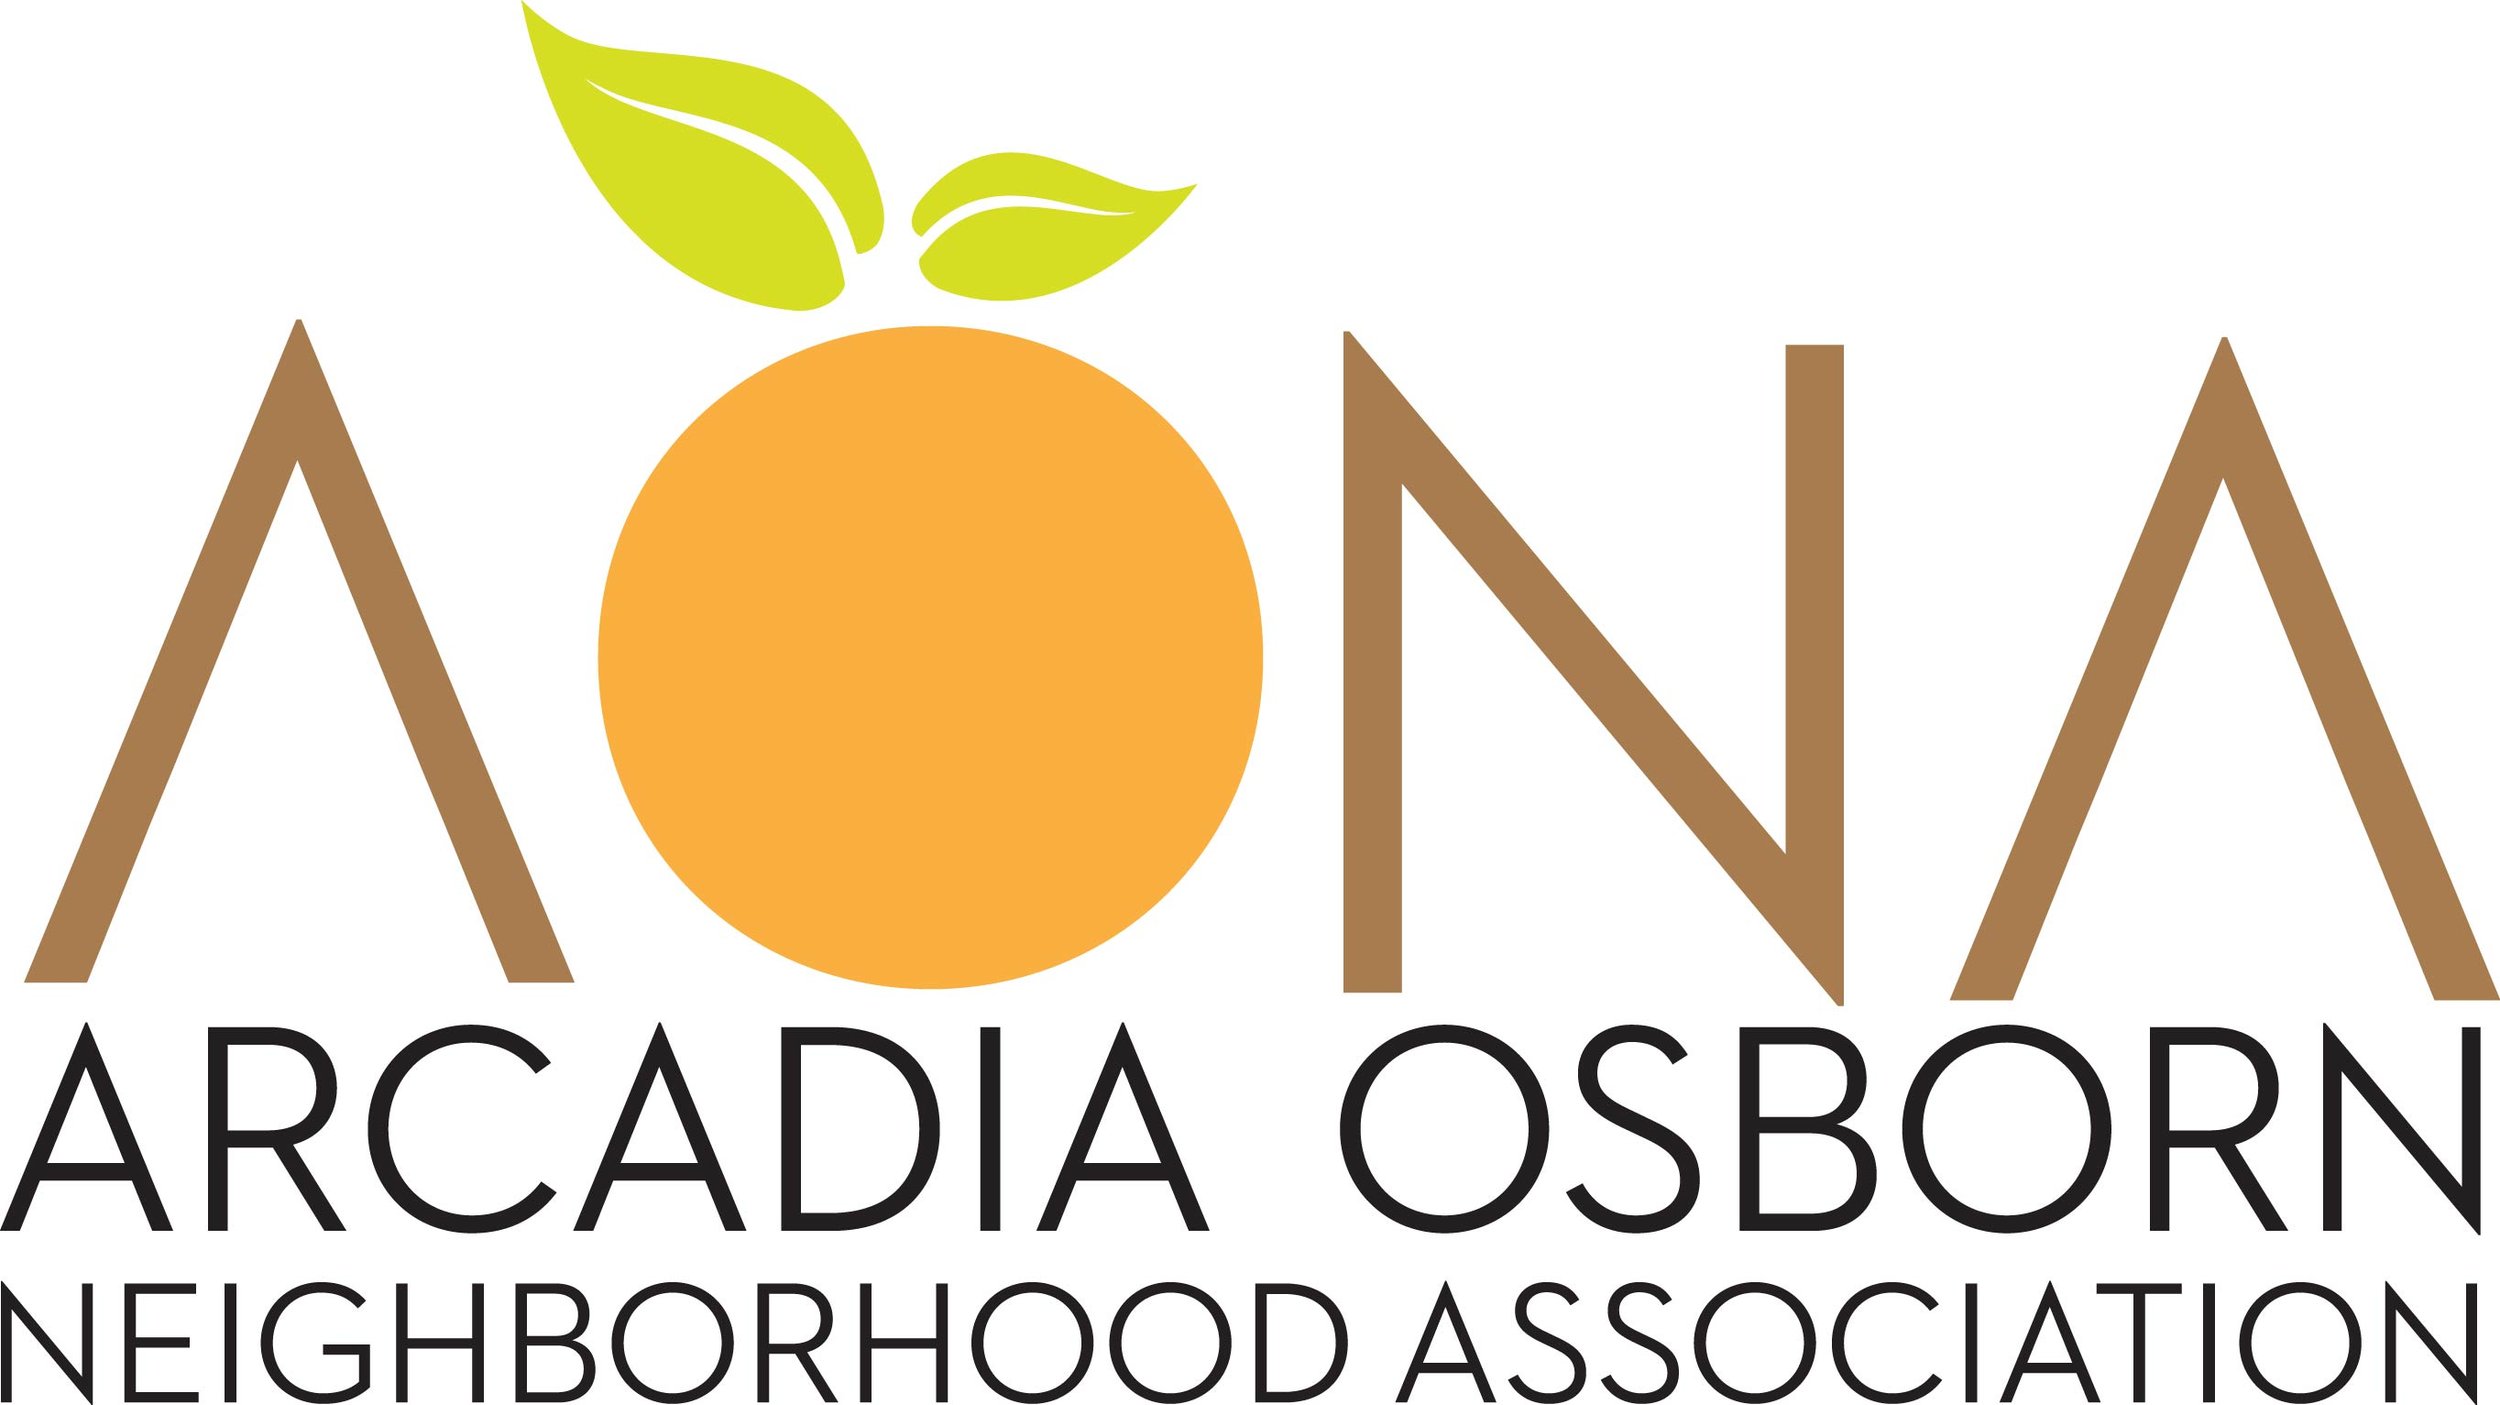 Arcadia Osborn Neighborhood Association